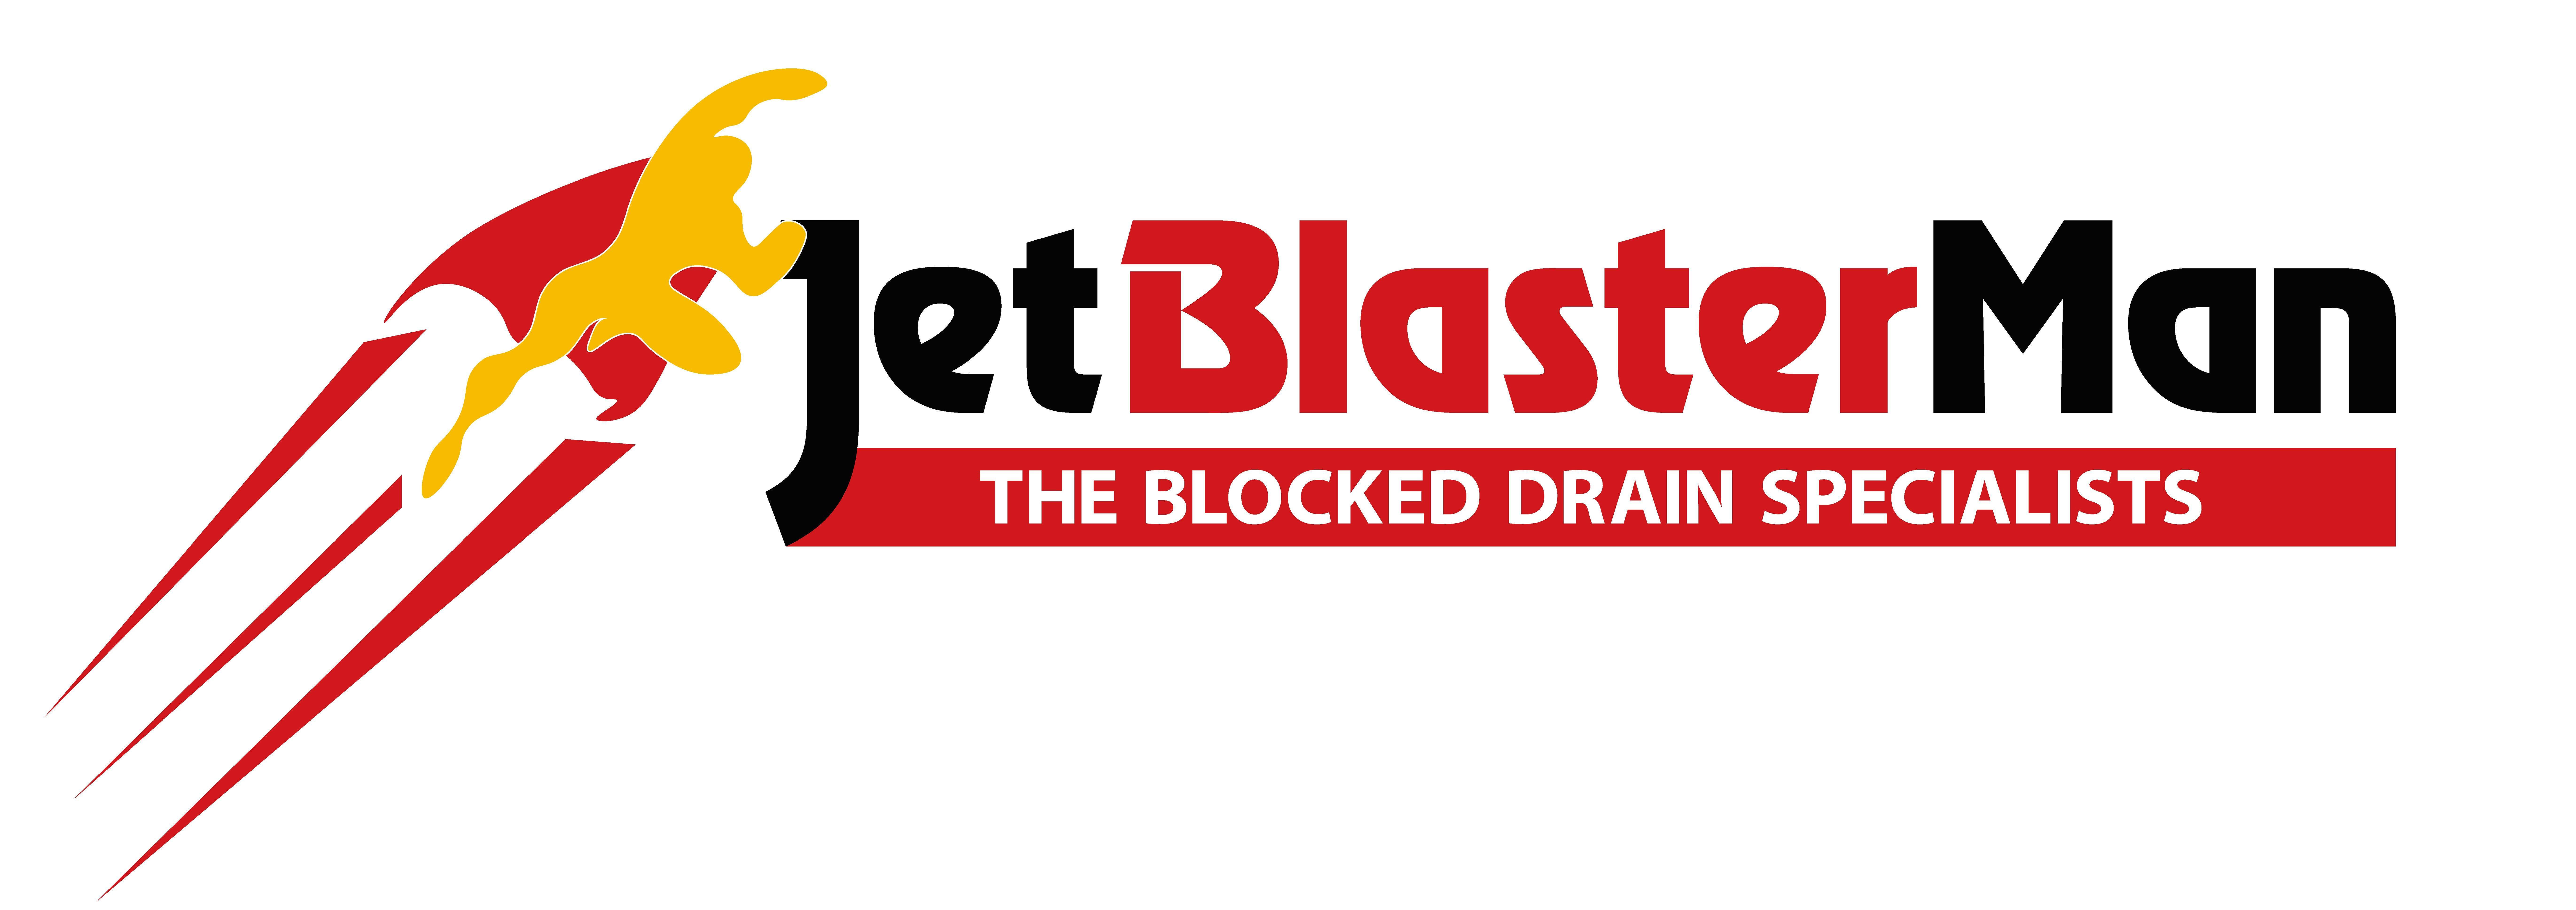 Unblocked Logo - Jet Blaster Man - Plumbing and Unblocked Drain Specialist - Plumbers ...